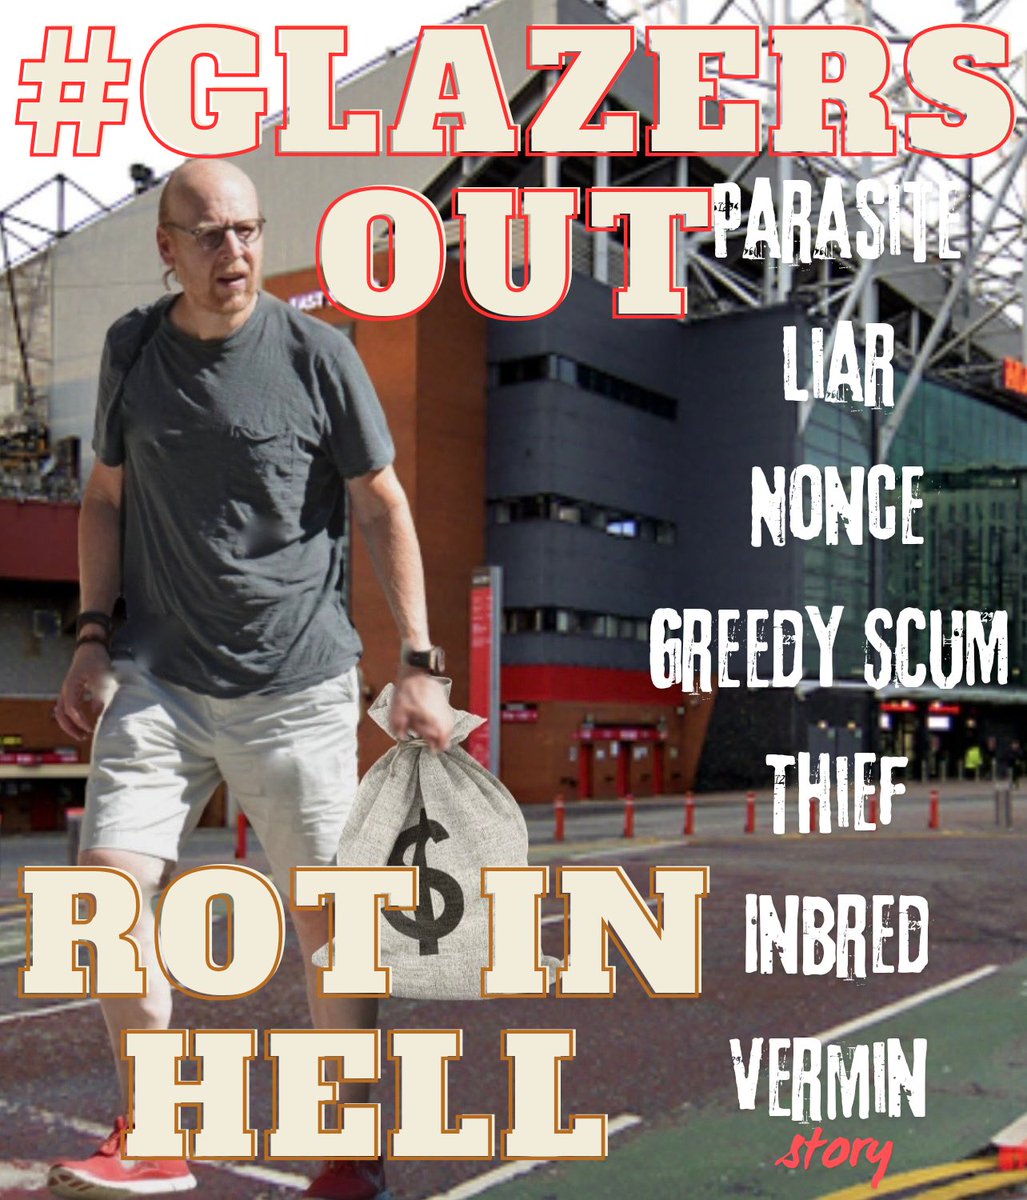 Get out #GlazersOut #GlazersAreNonces #GlazersSellManUtd